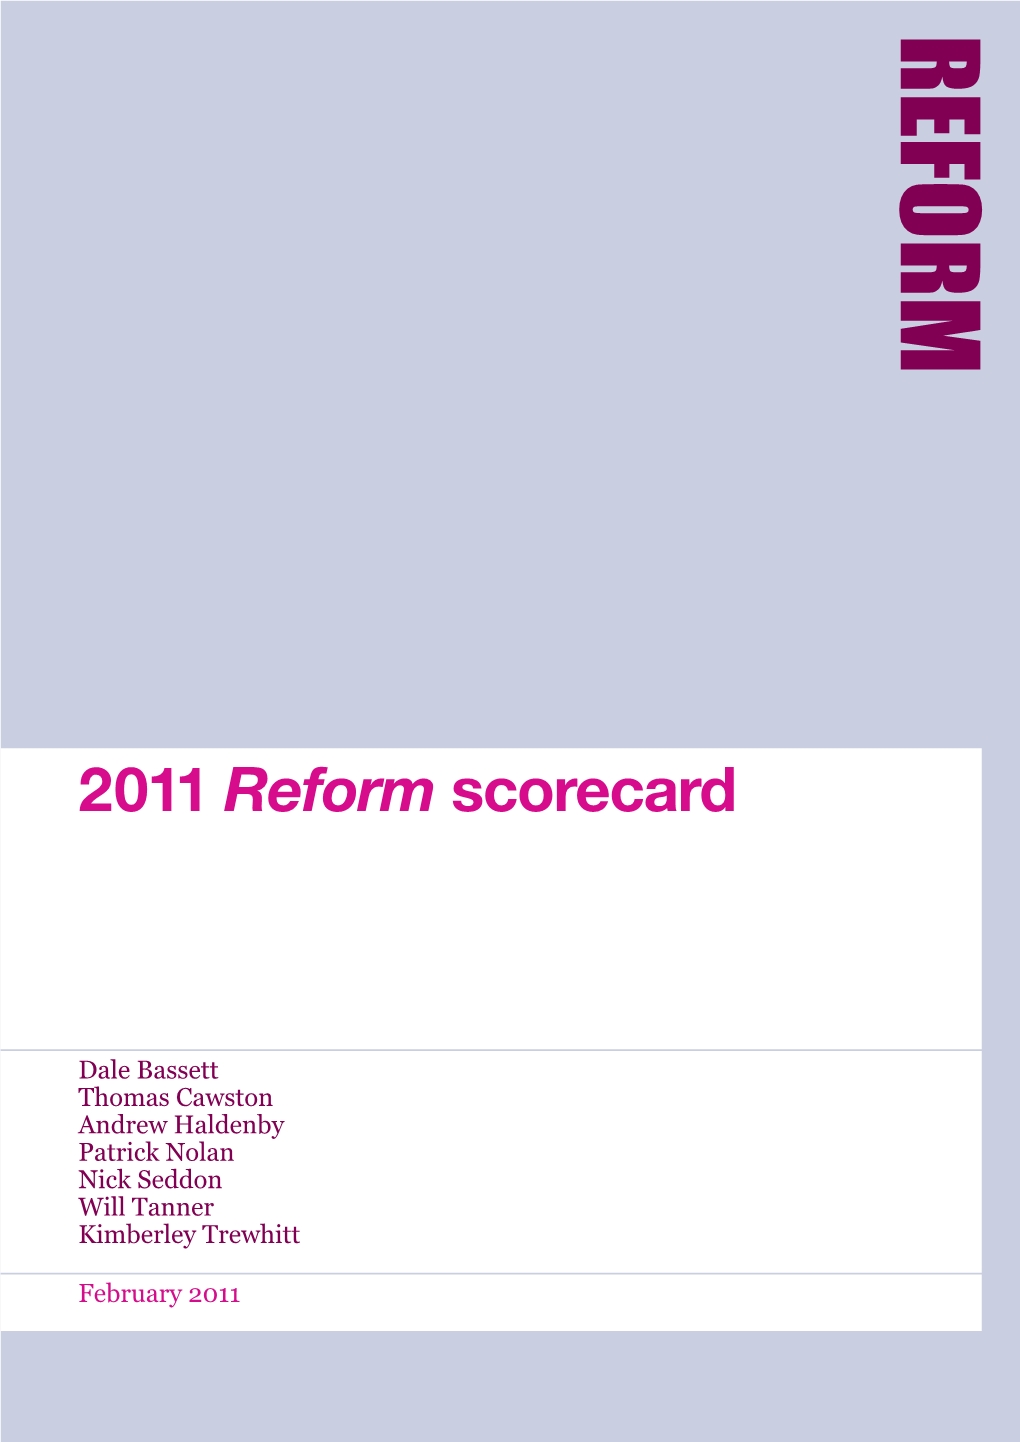 2011 Reform Scorecard